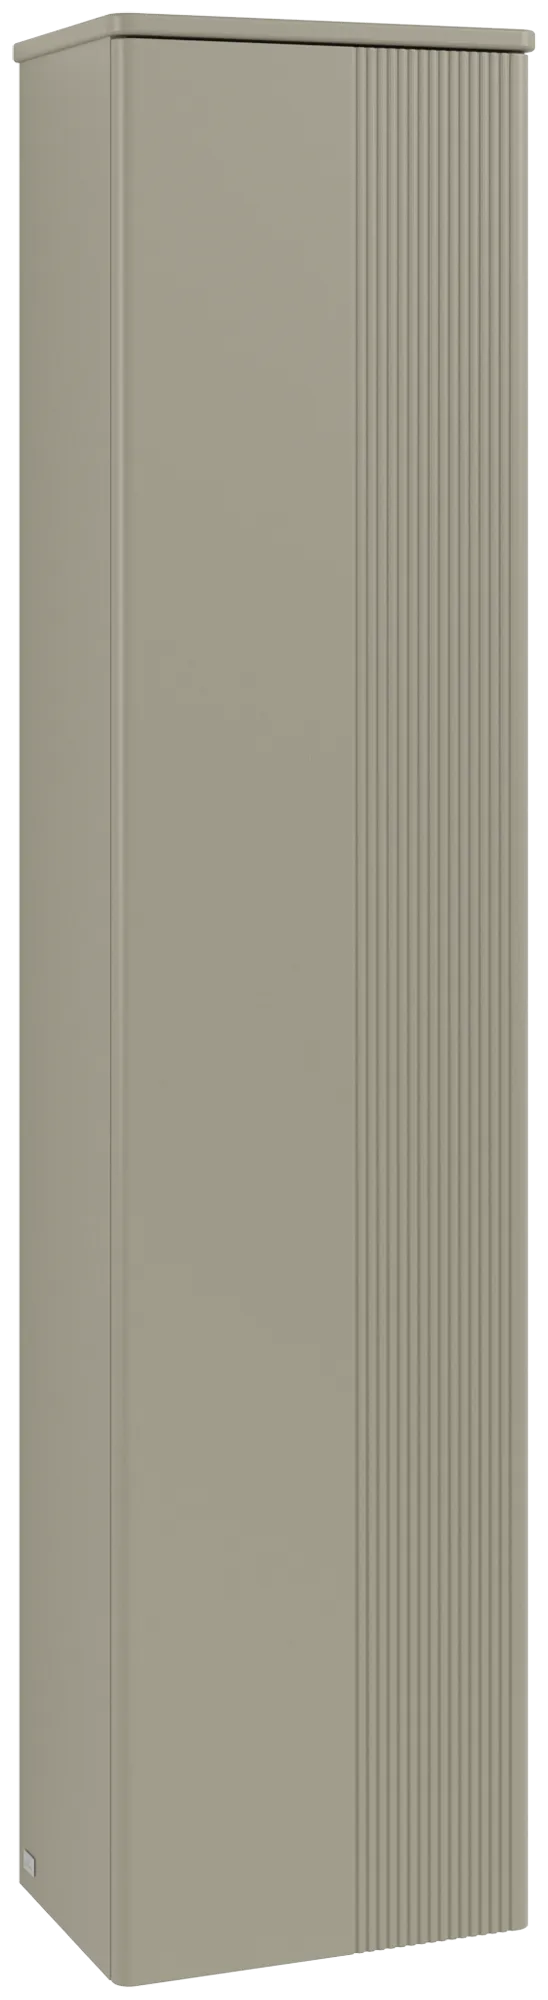 VILLEROY BOCH Antao Tall cabinet, 1 door, 414 x 1719 x 287 mm, Front with grain texture, Stone Grey Matt Lacquer / Stone Grey Matt Lacquer #K45100HK resmi